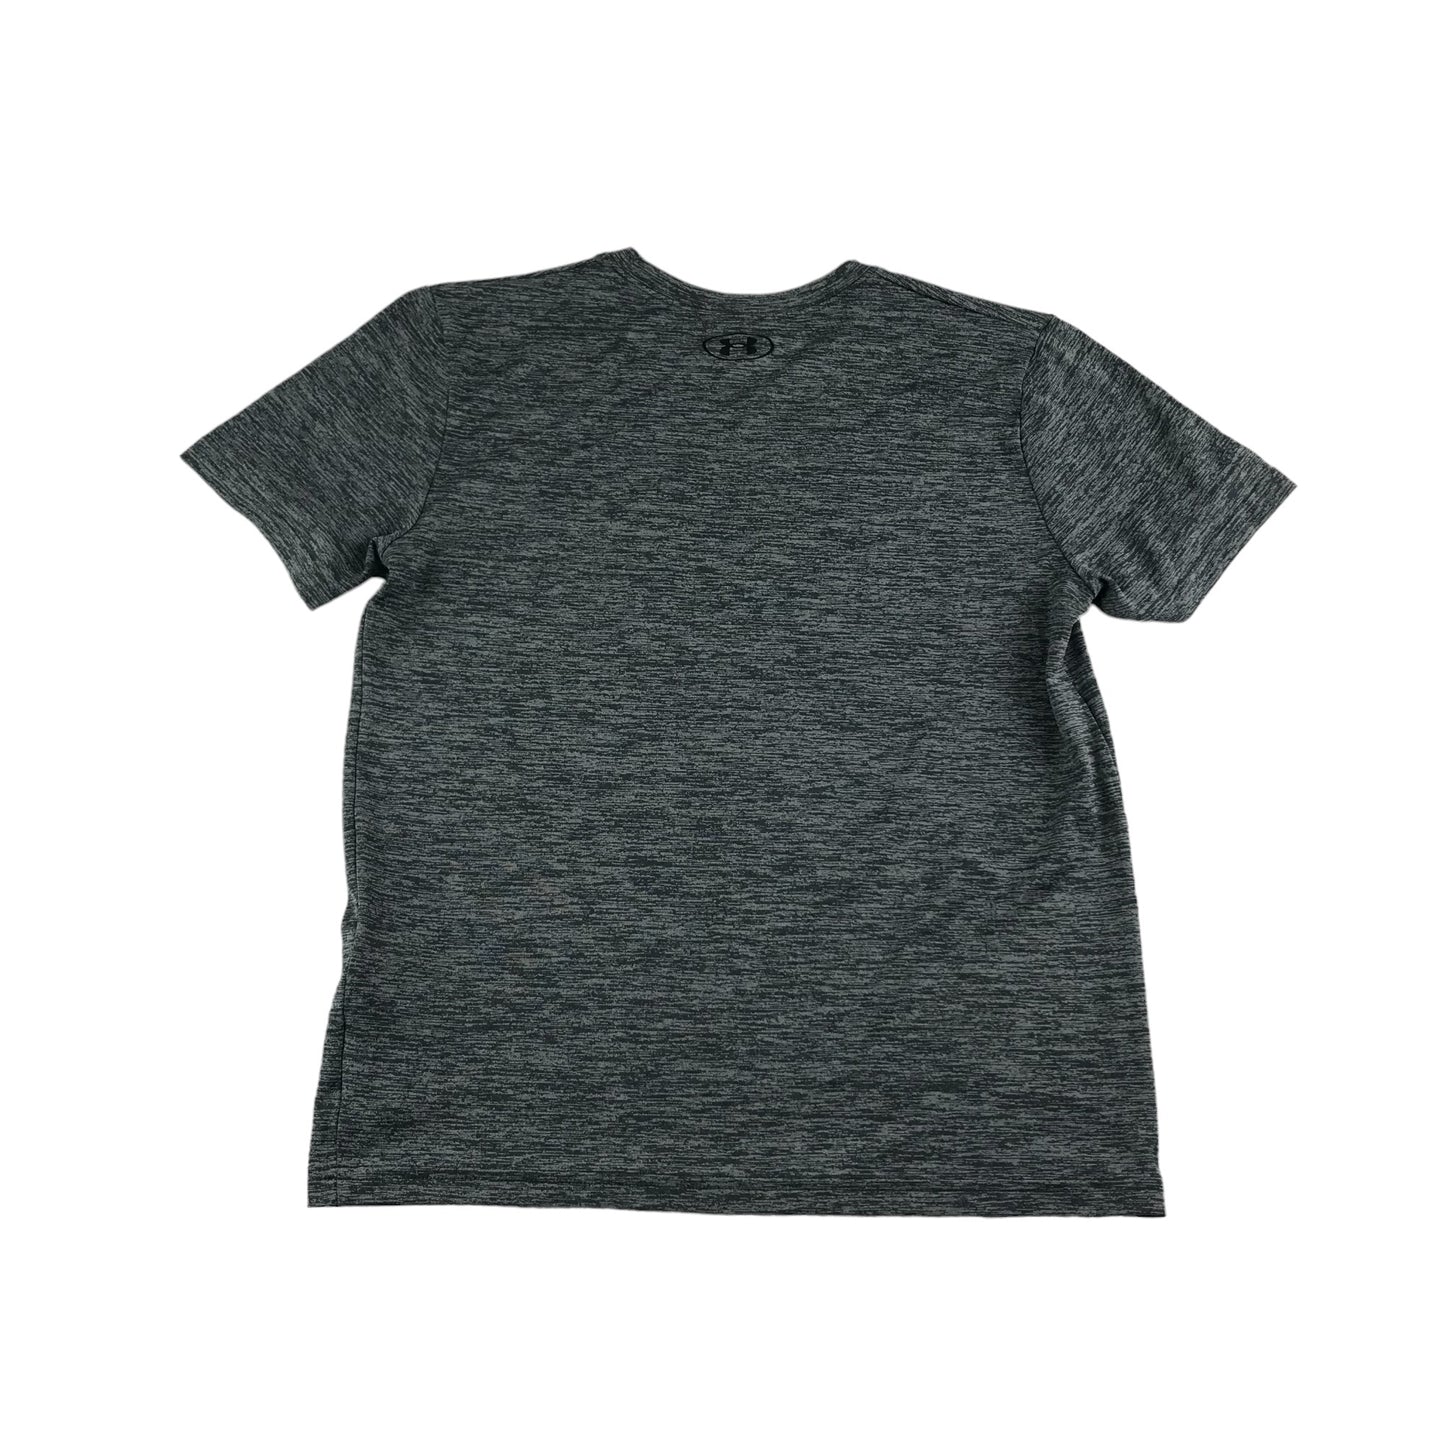 Under Armour Sports Top Age 11-12 Grey Heatgear Distressed Pattern Short Sleeve T-shirt